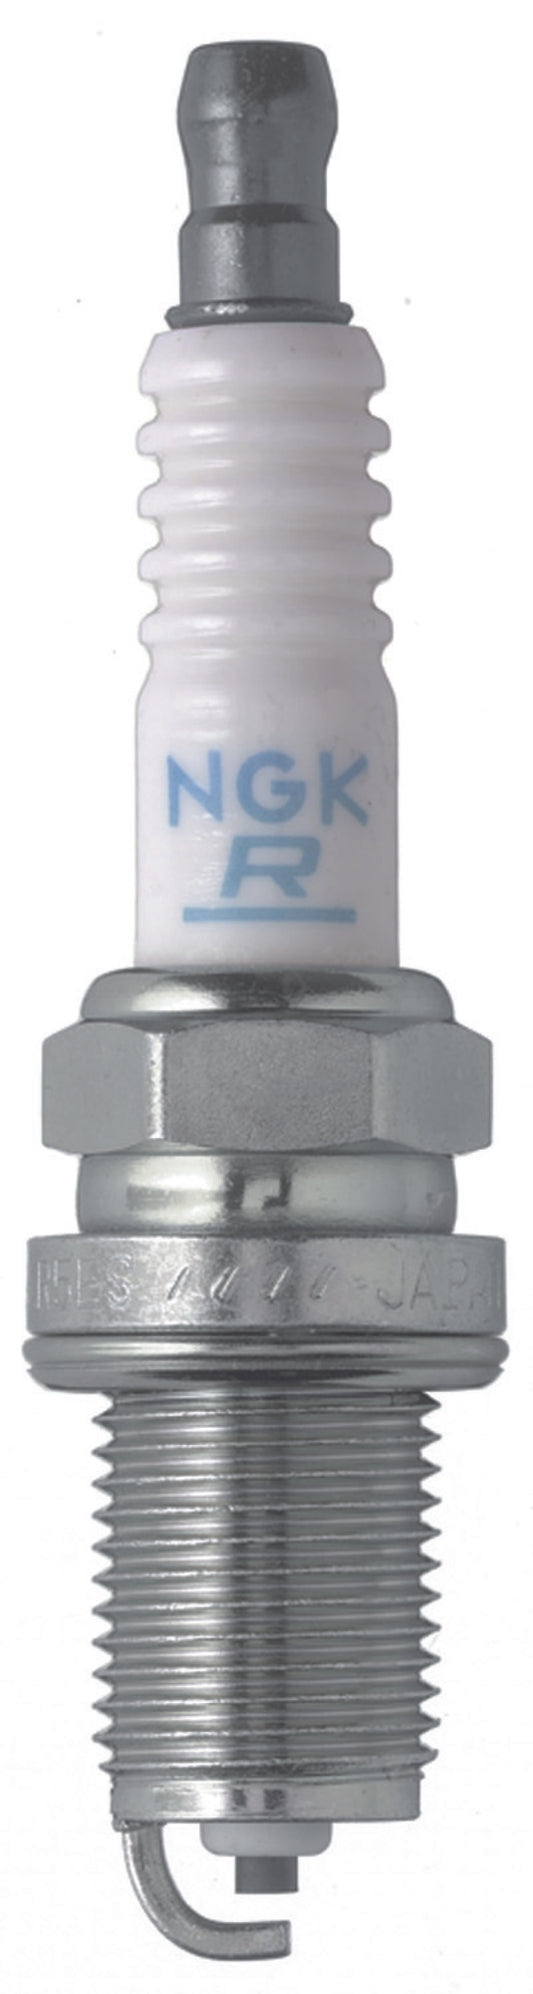 NGK Nickel Spark Plug Box of 4 (BKR6EY)